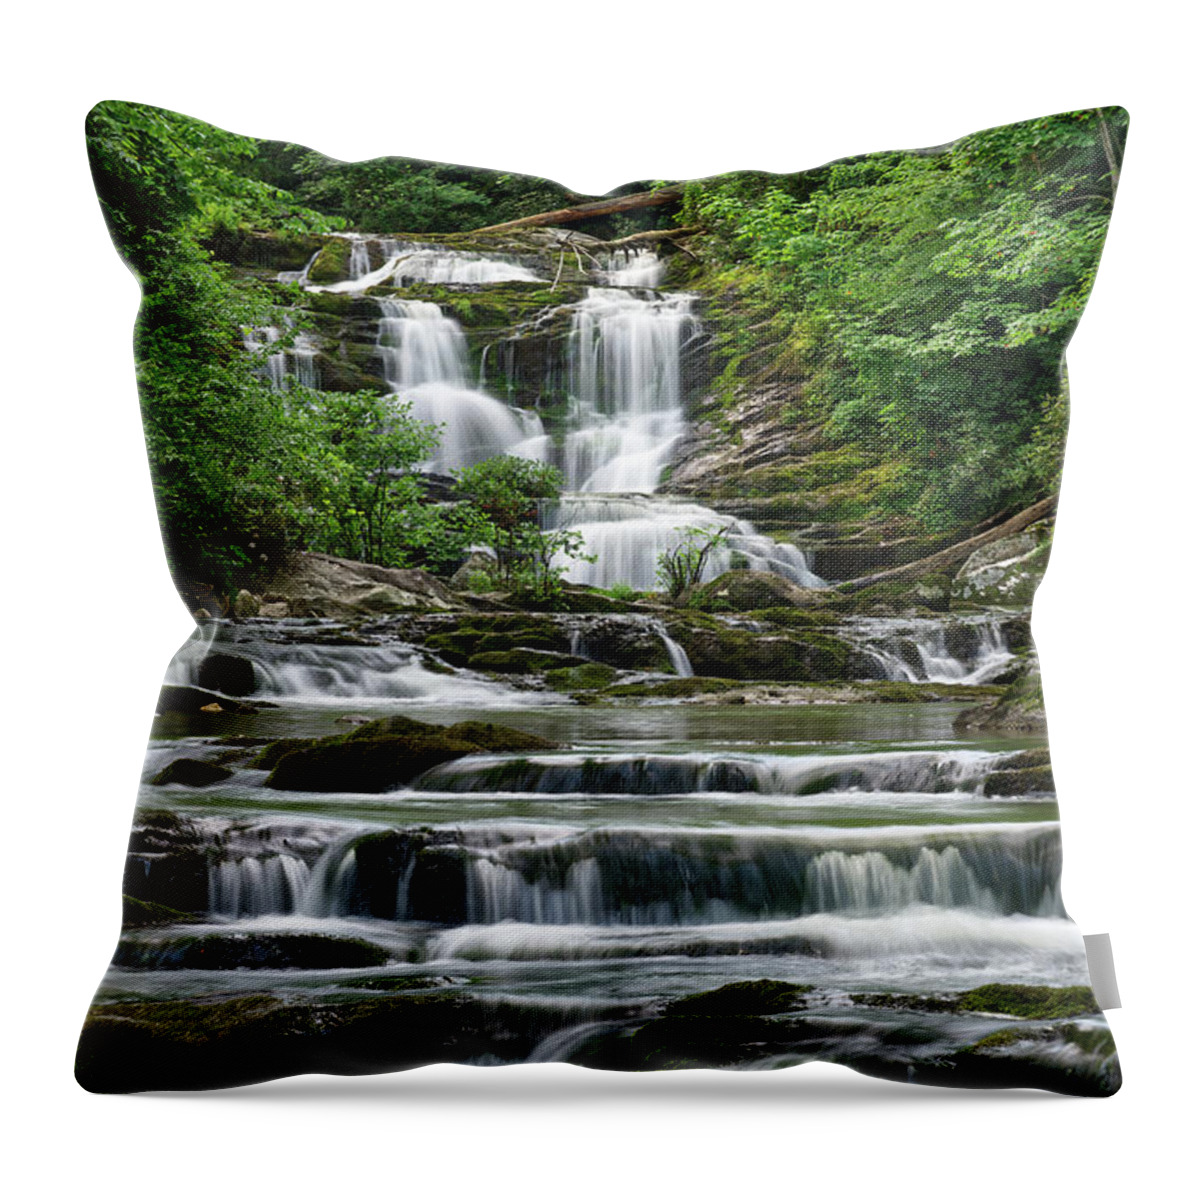 Conasauga Falls Throw Pillow featuring the photograph Conasauga Waterfall 19 by Phil Perkins